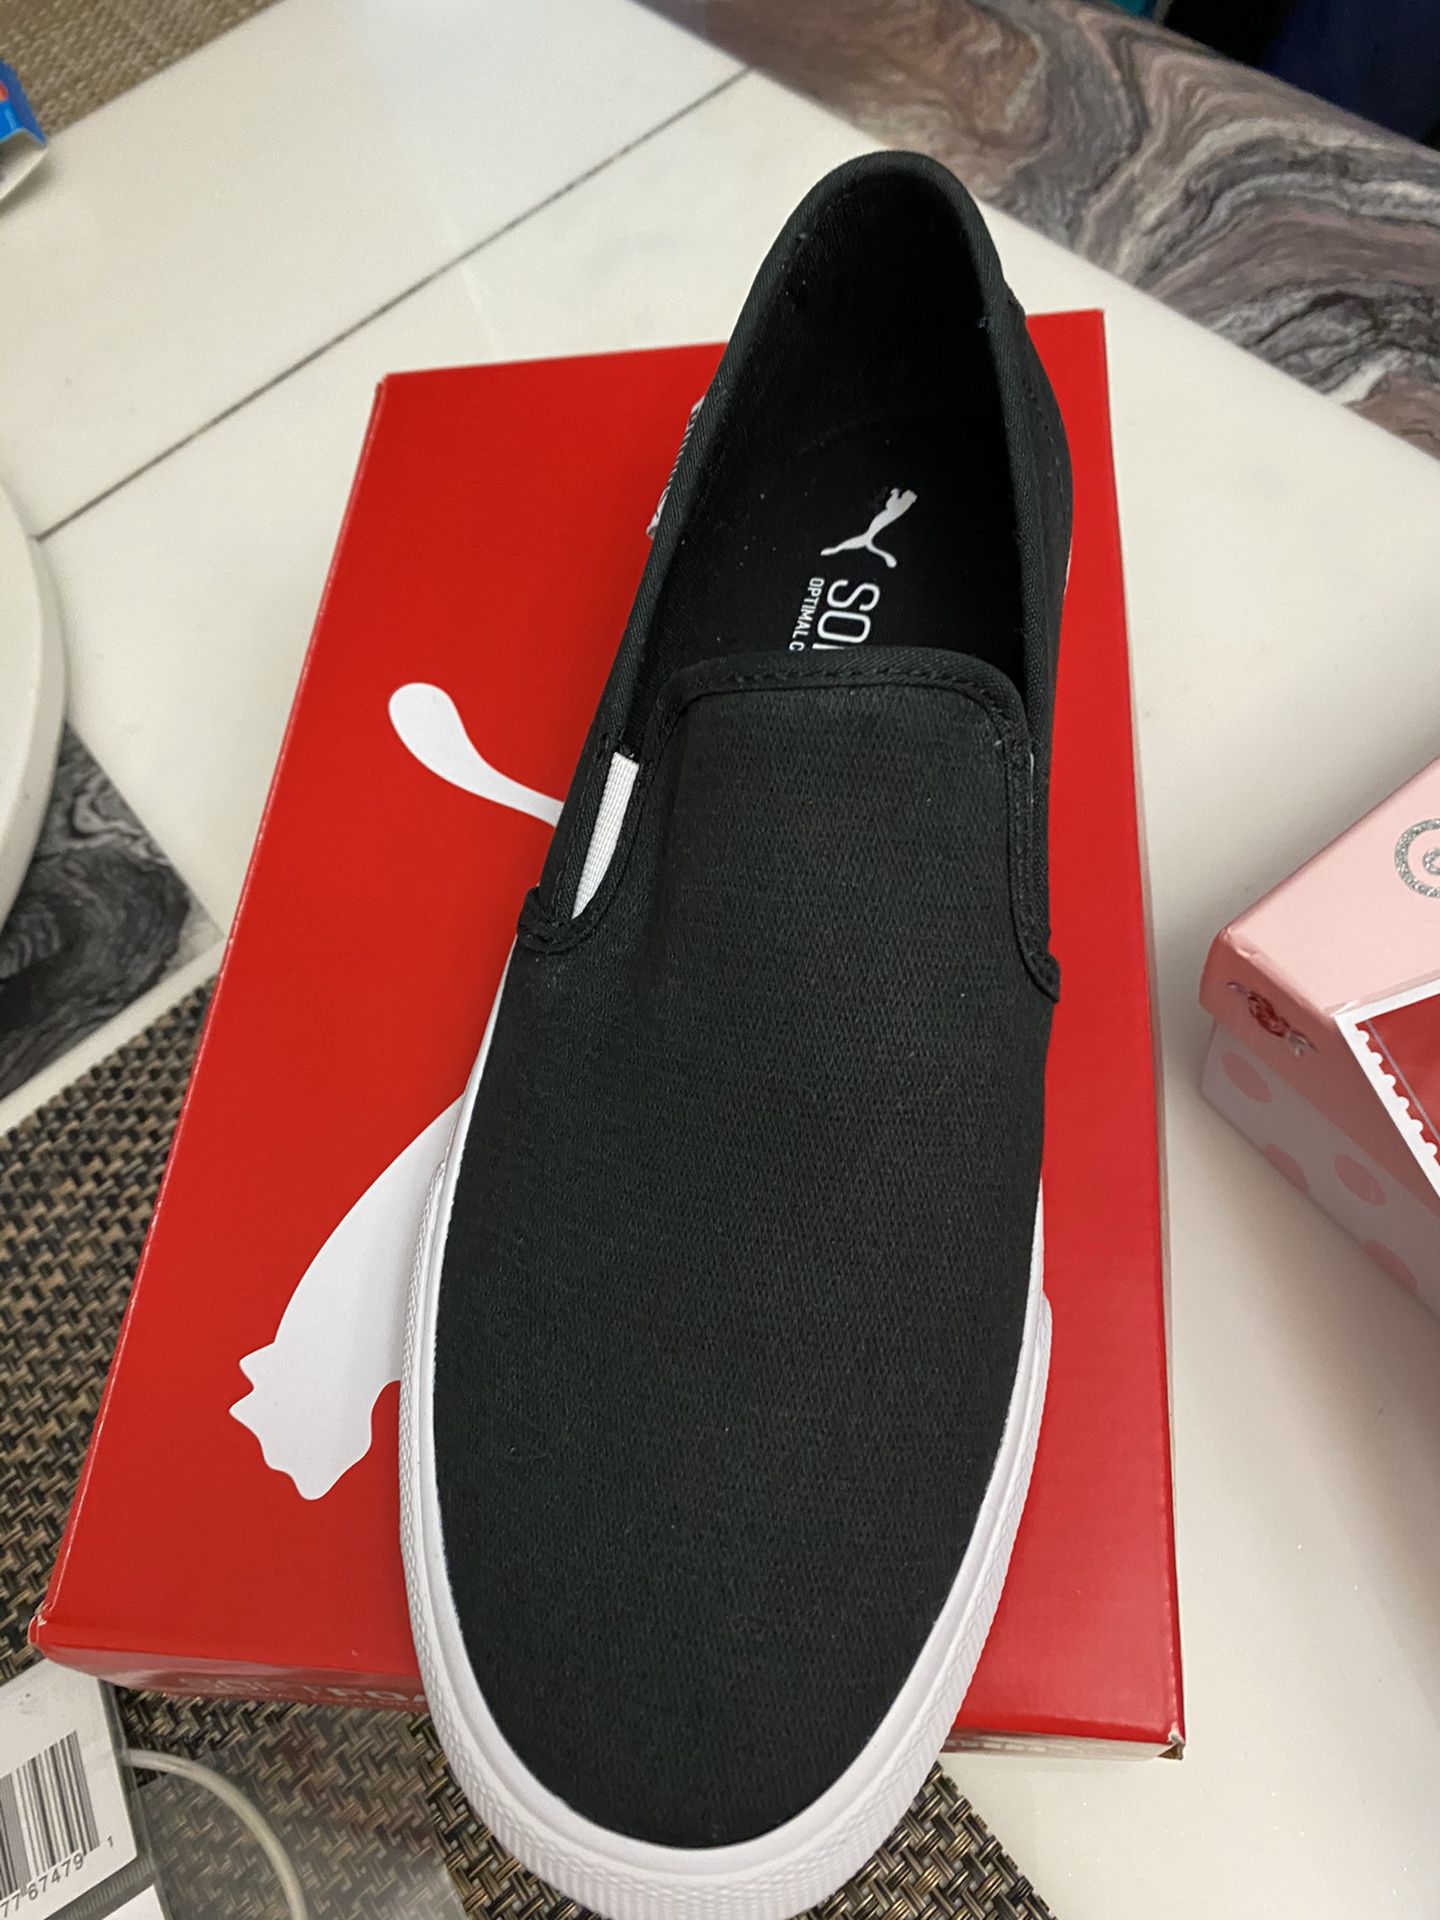 Puma men’s shoes